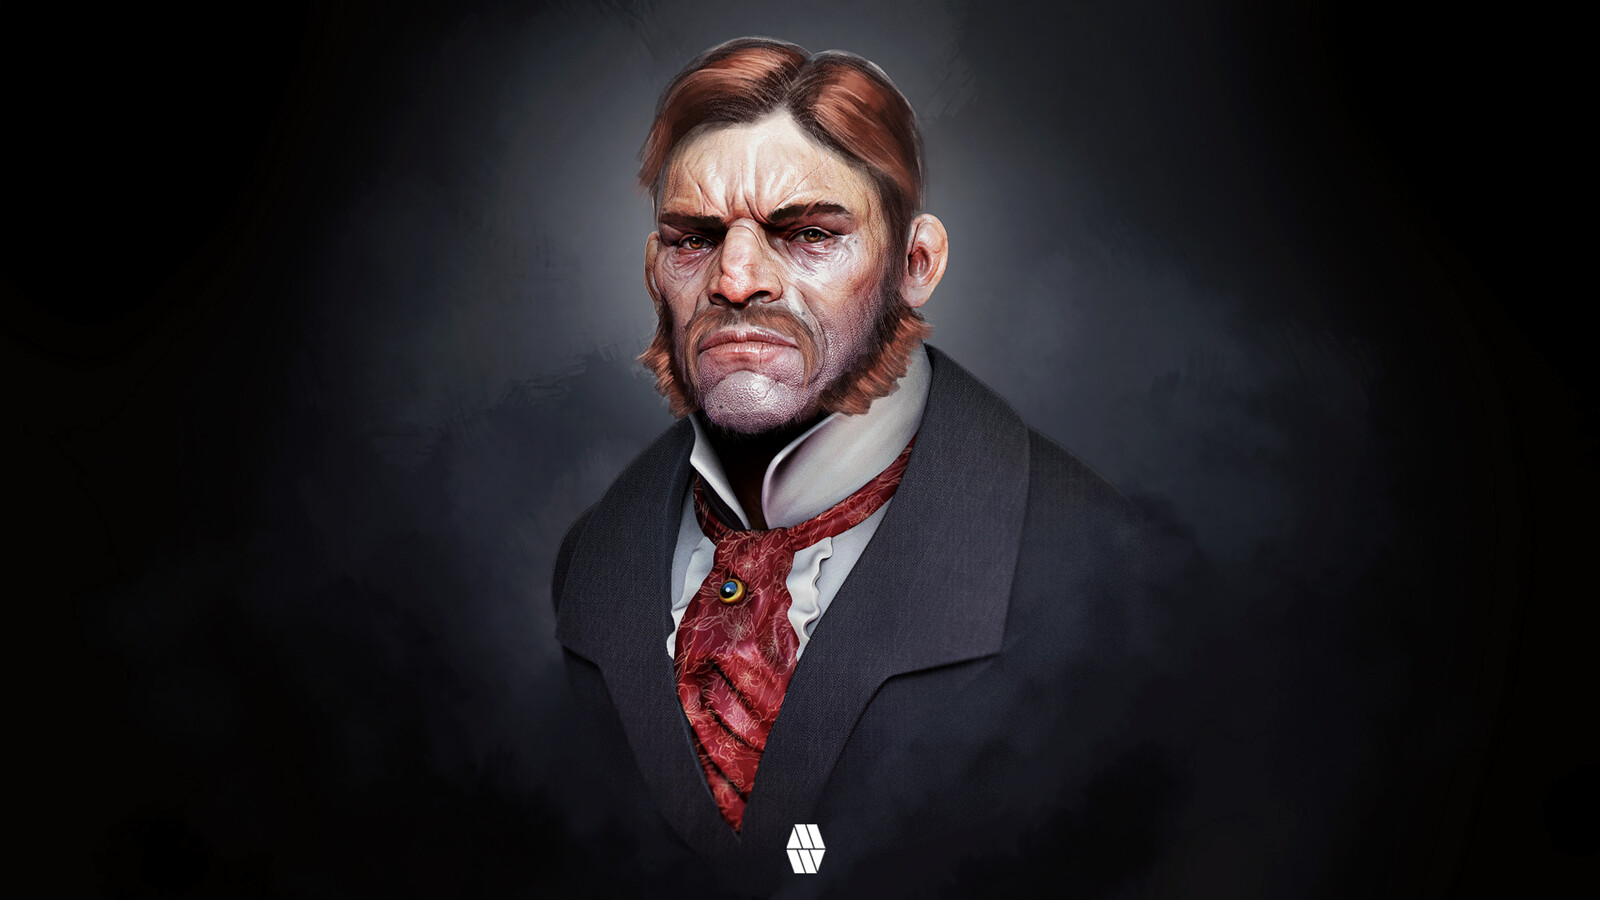 Gentleman Thug - Male Portrait- Personal Project 